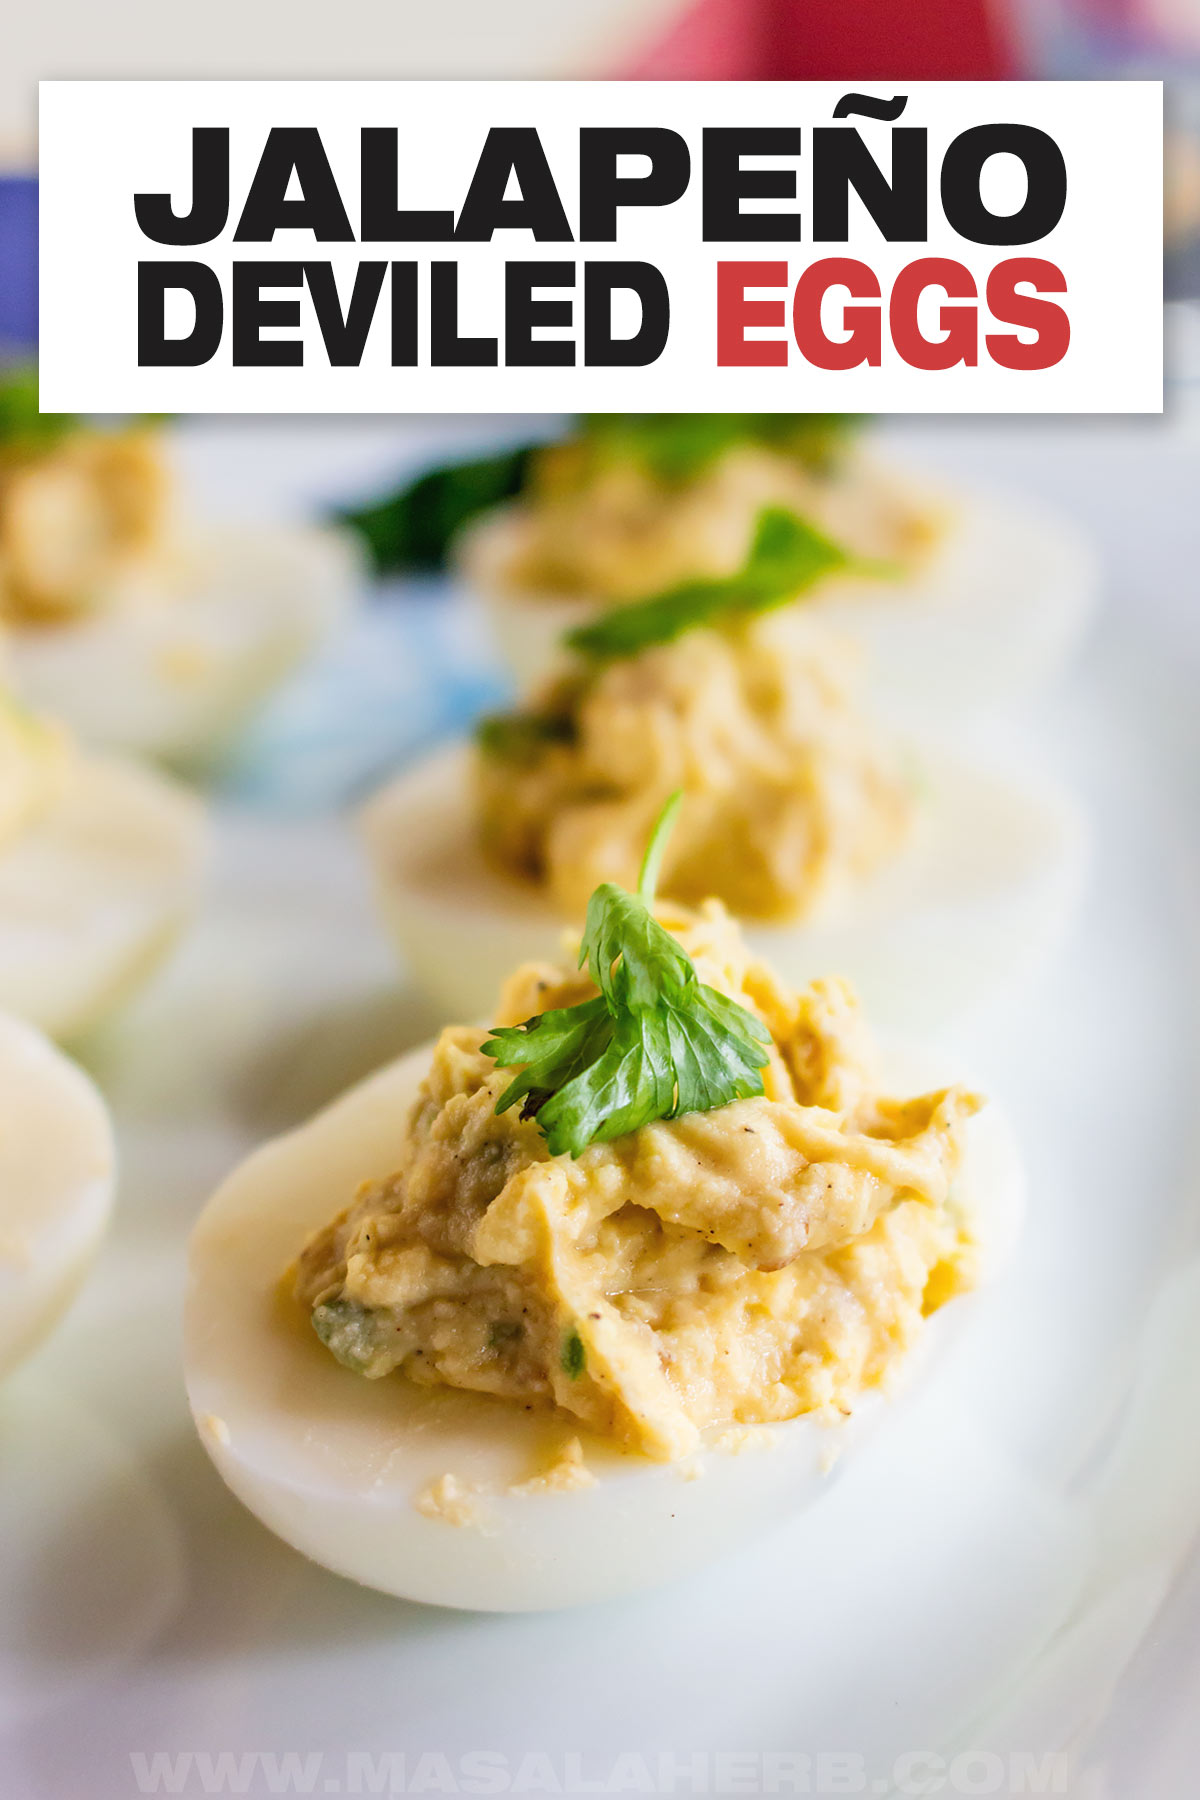 Jalapeño Deviled Eggs cover image